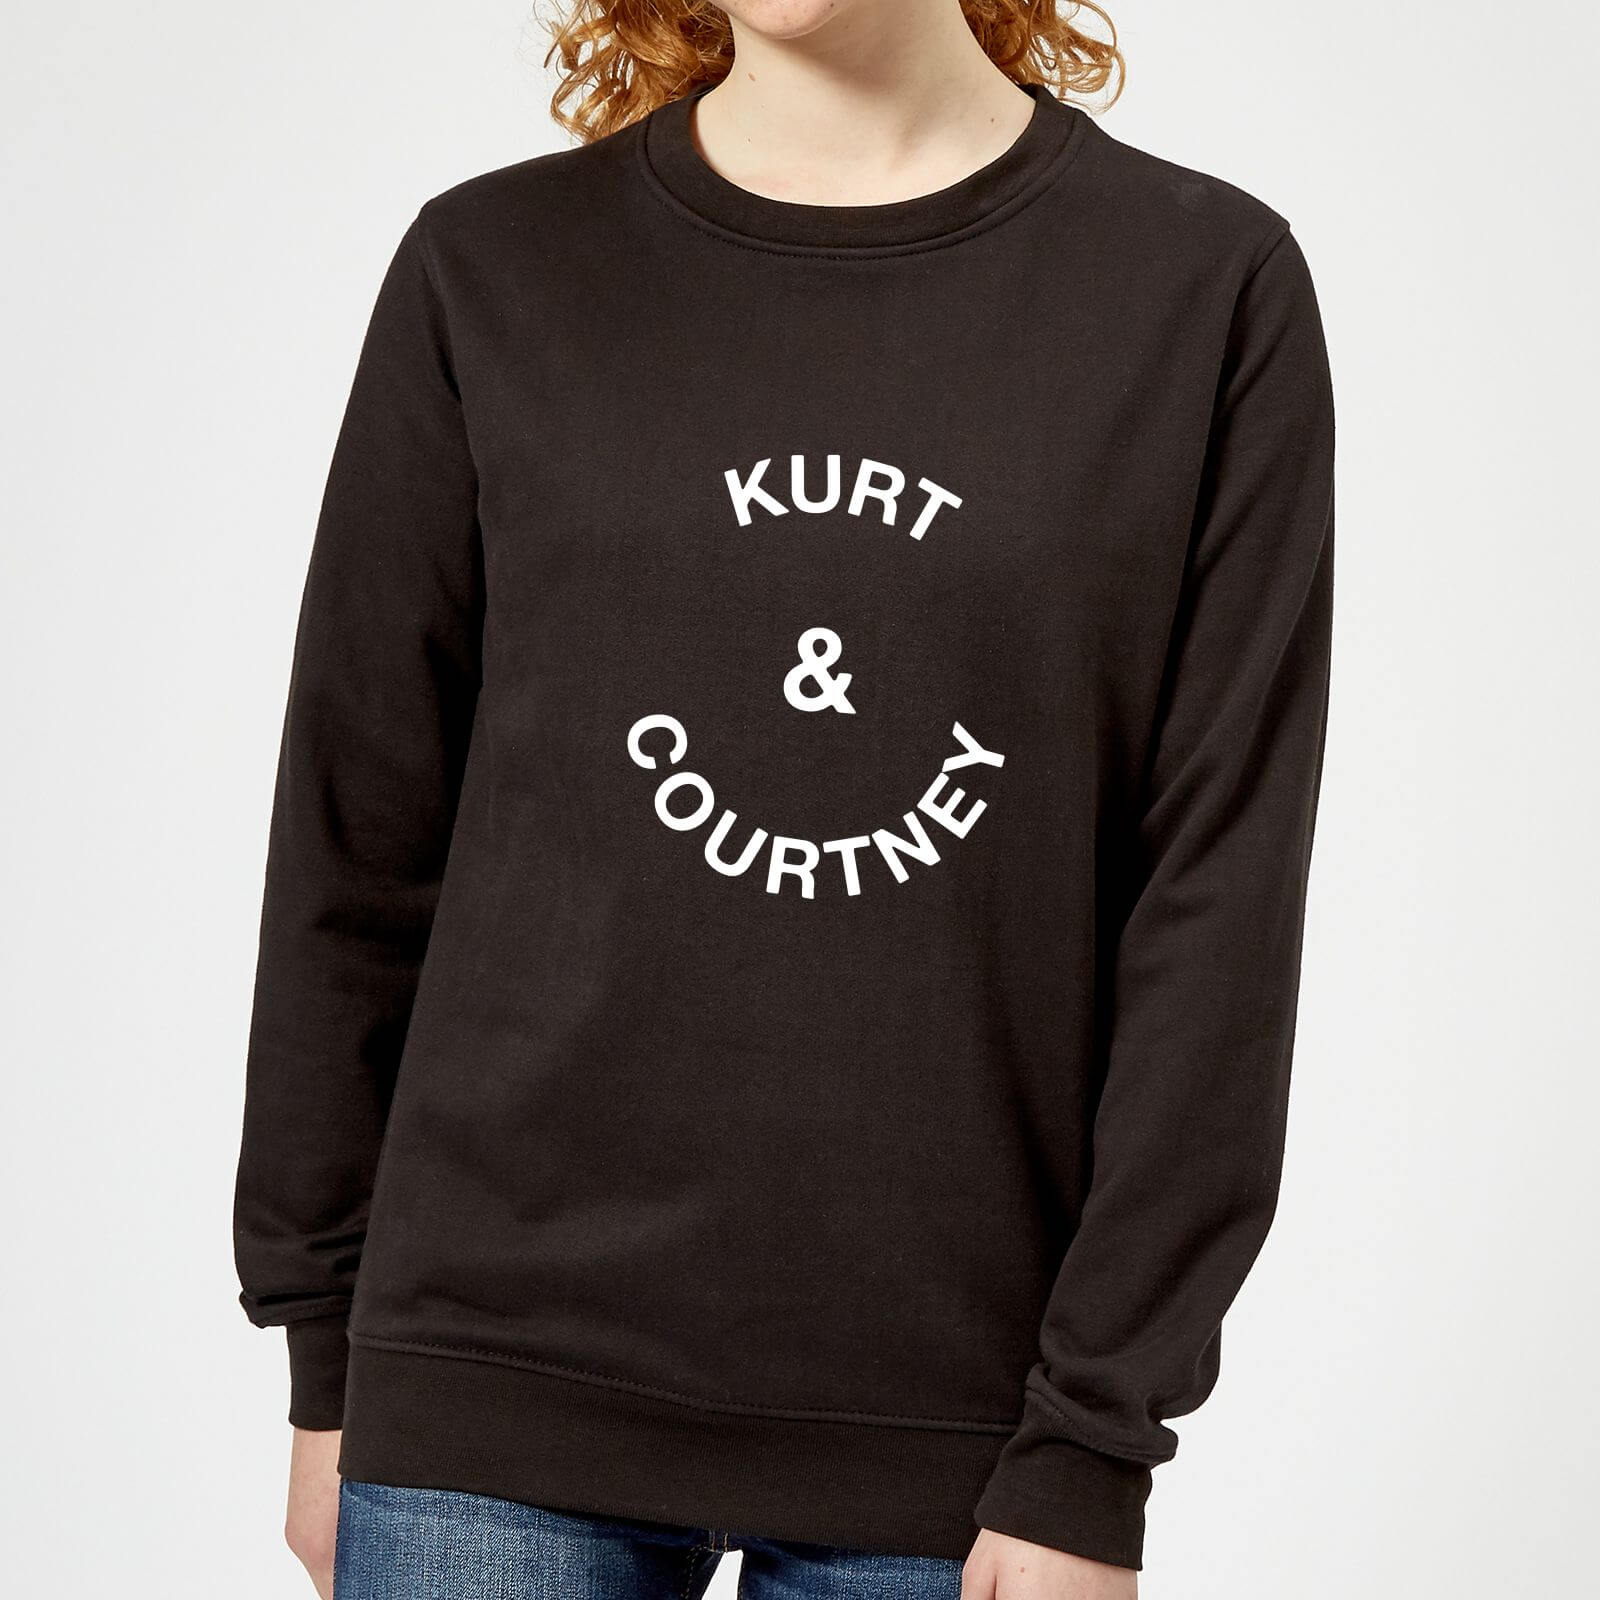 Kurt & Courtney Women's Sweatshirt - Black - S - Black